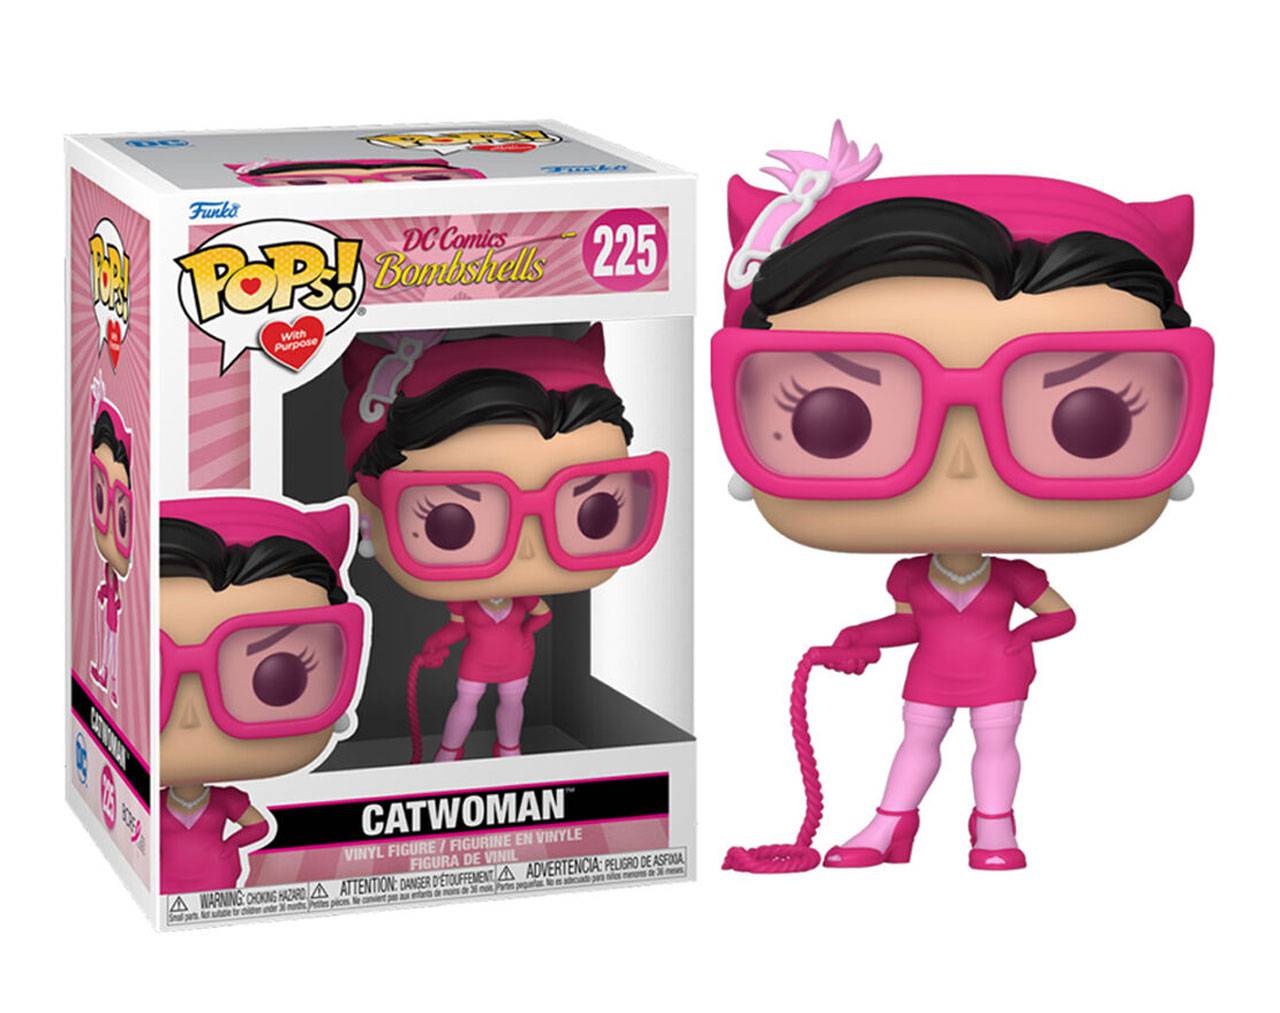 Catwoman (With Purpose) Pop! Vinyl